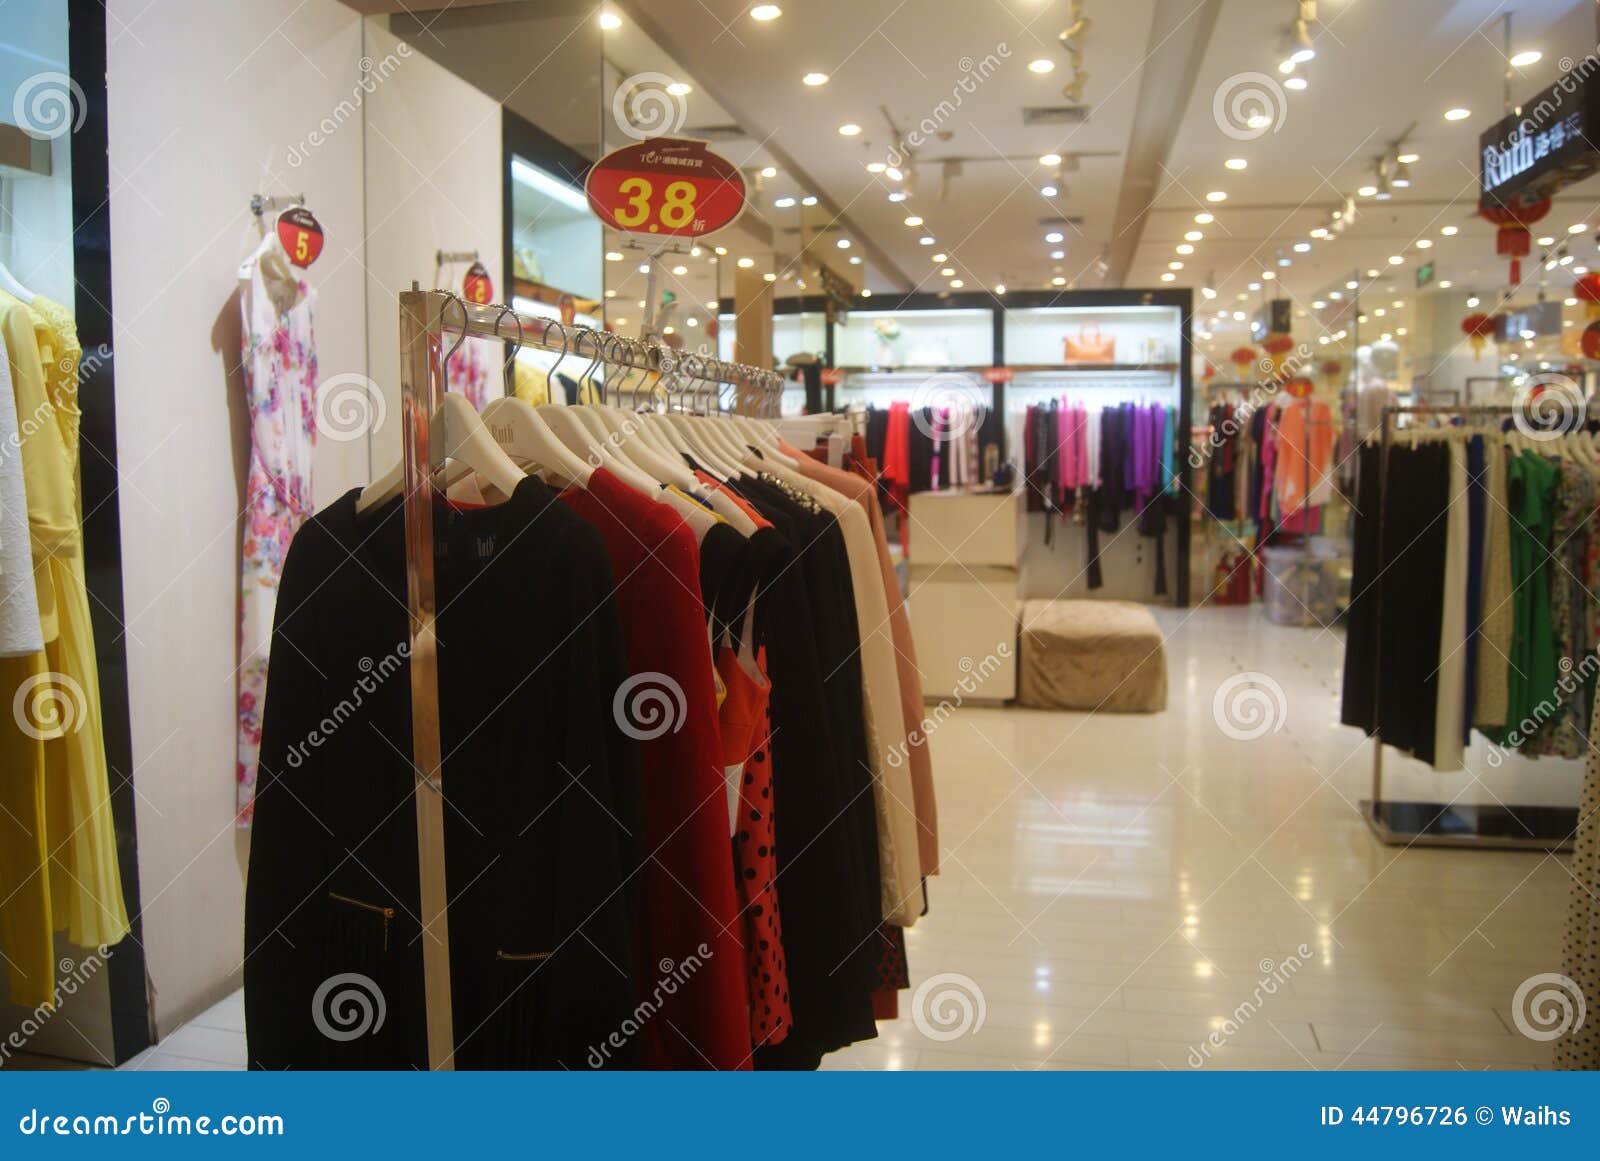 Shenzhen, China: Clothing Store Editorial Photo - Image of interior ...